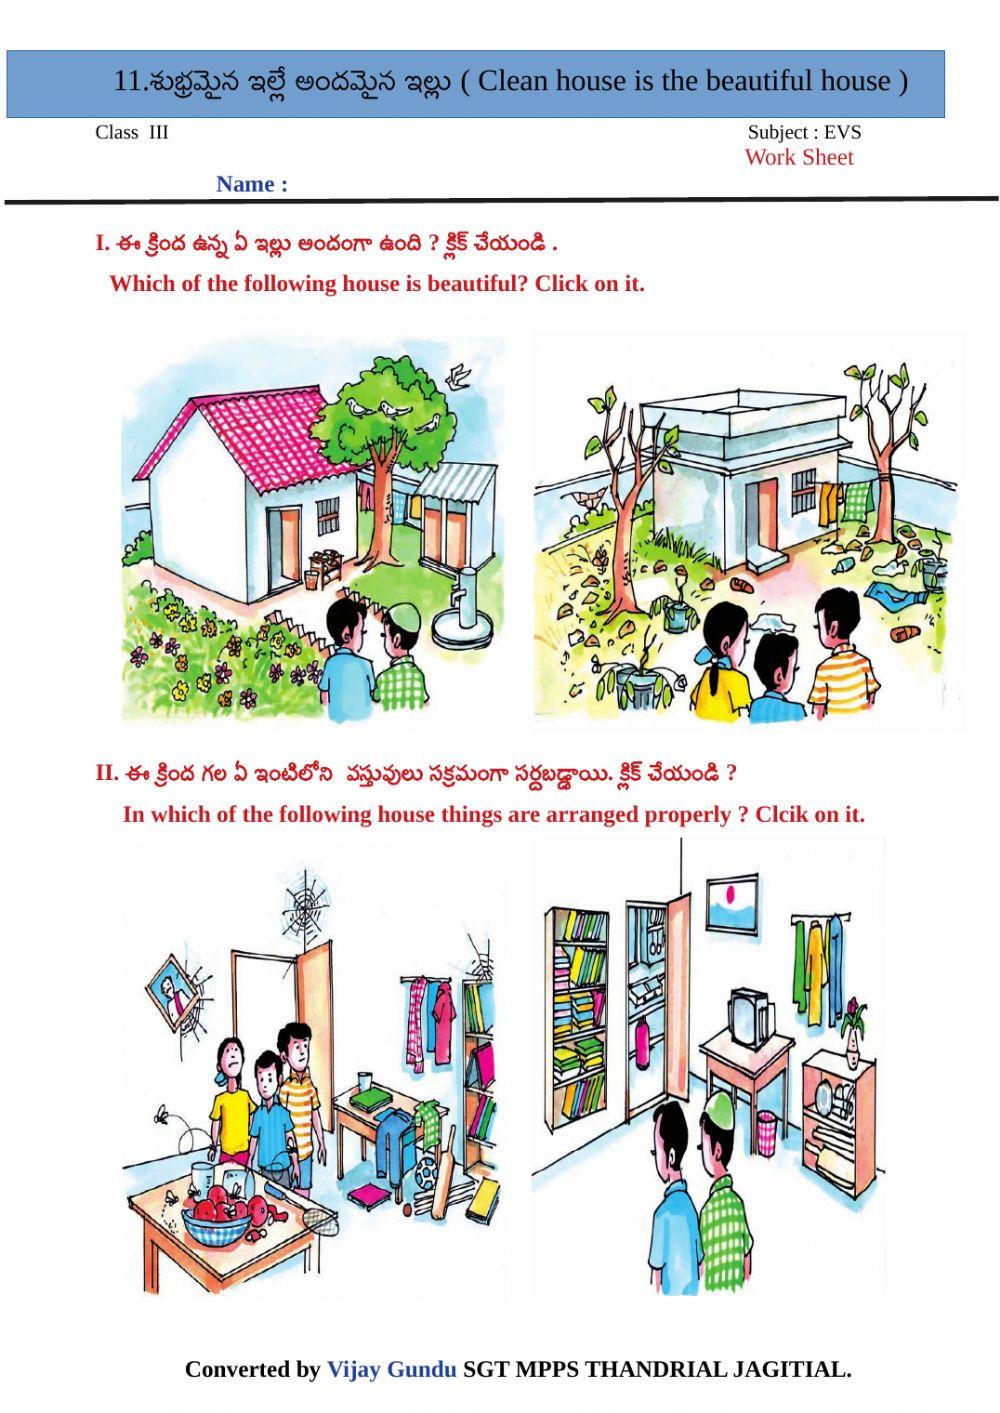 3rd evs cleanhouse 1 by Vijay Gundu